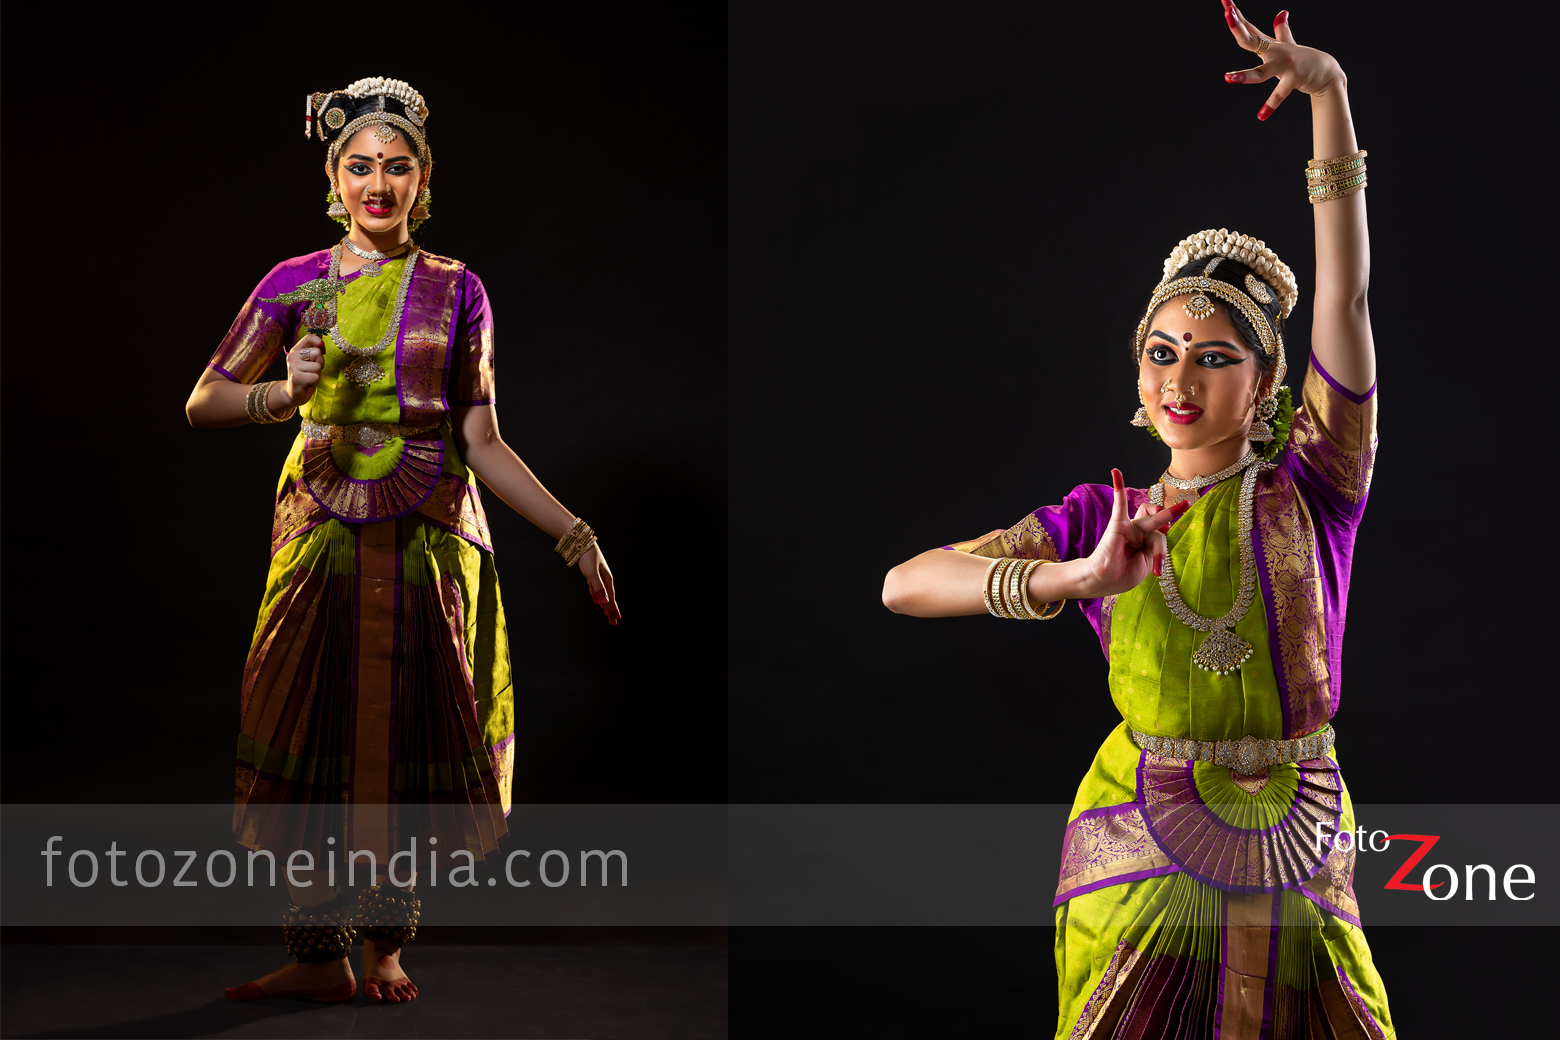 ANNIV SPL:Bharatanatyam dancer Sohini Roychowdhury talks about going global  with the art form